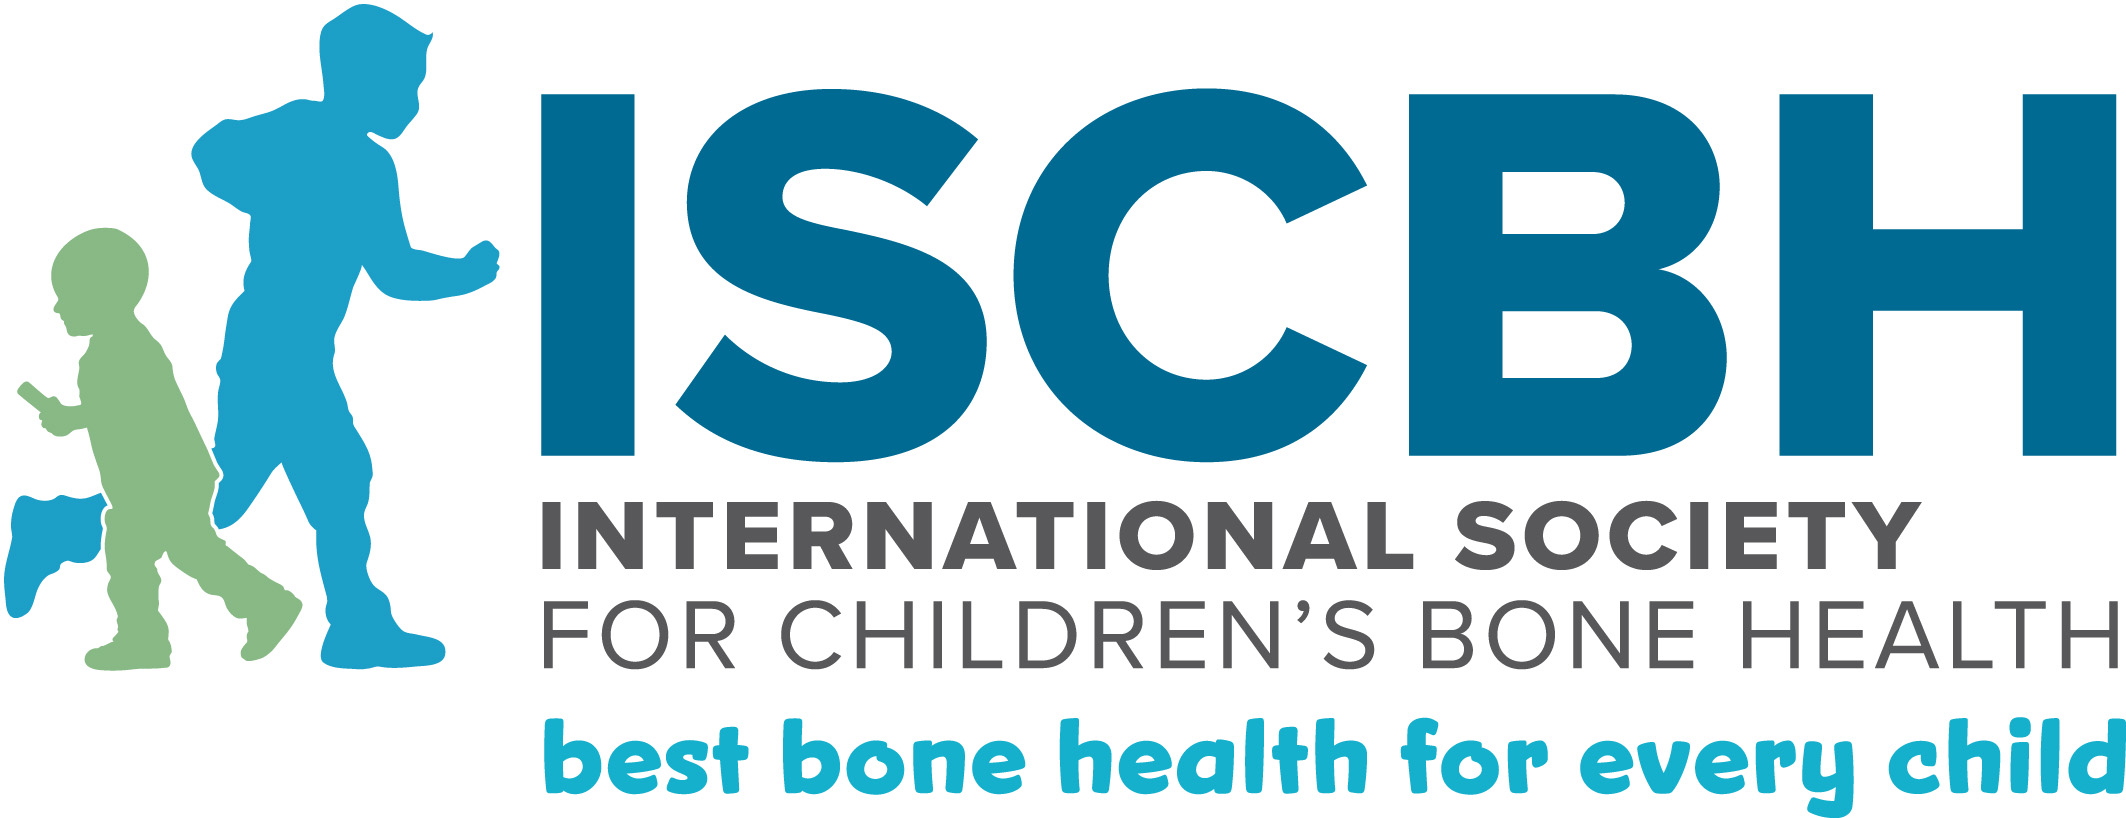 International Society for Children's Bone Health (ISCBH)